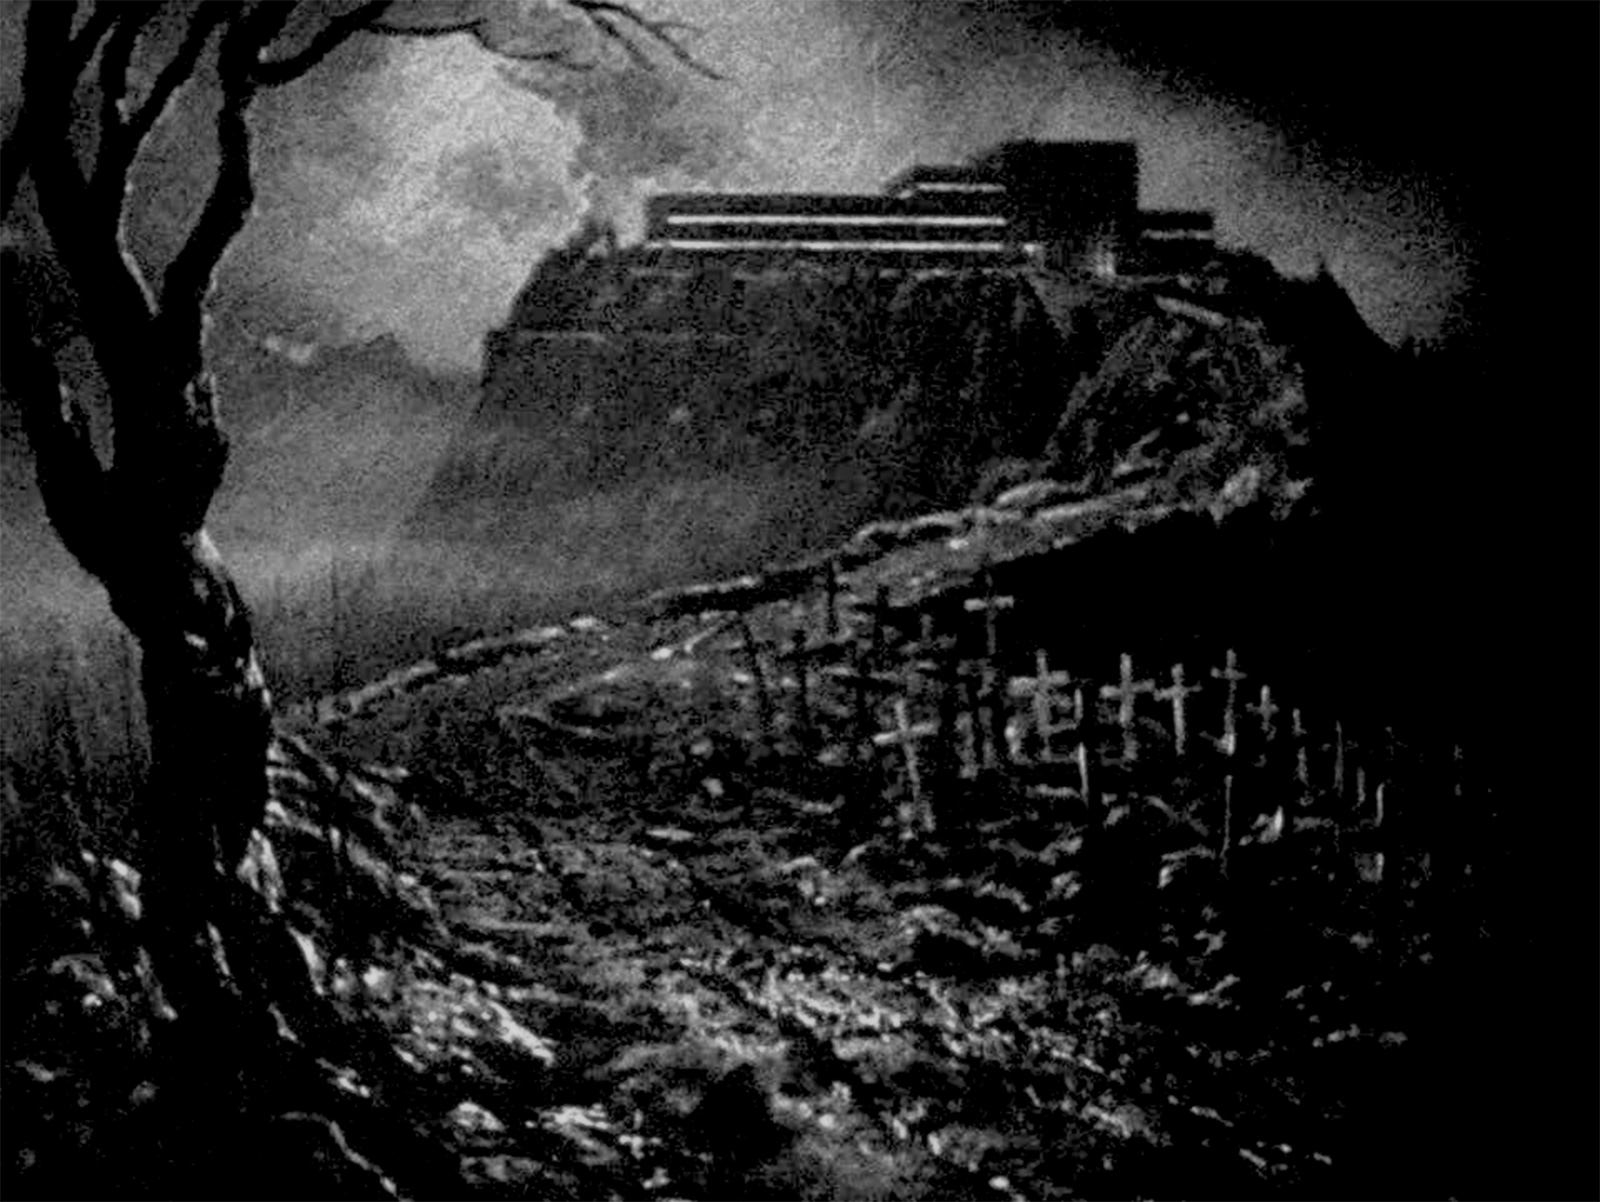 Film still from The Black Cat, 1934, directed by Edgar G. Ulmer.